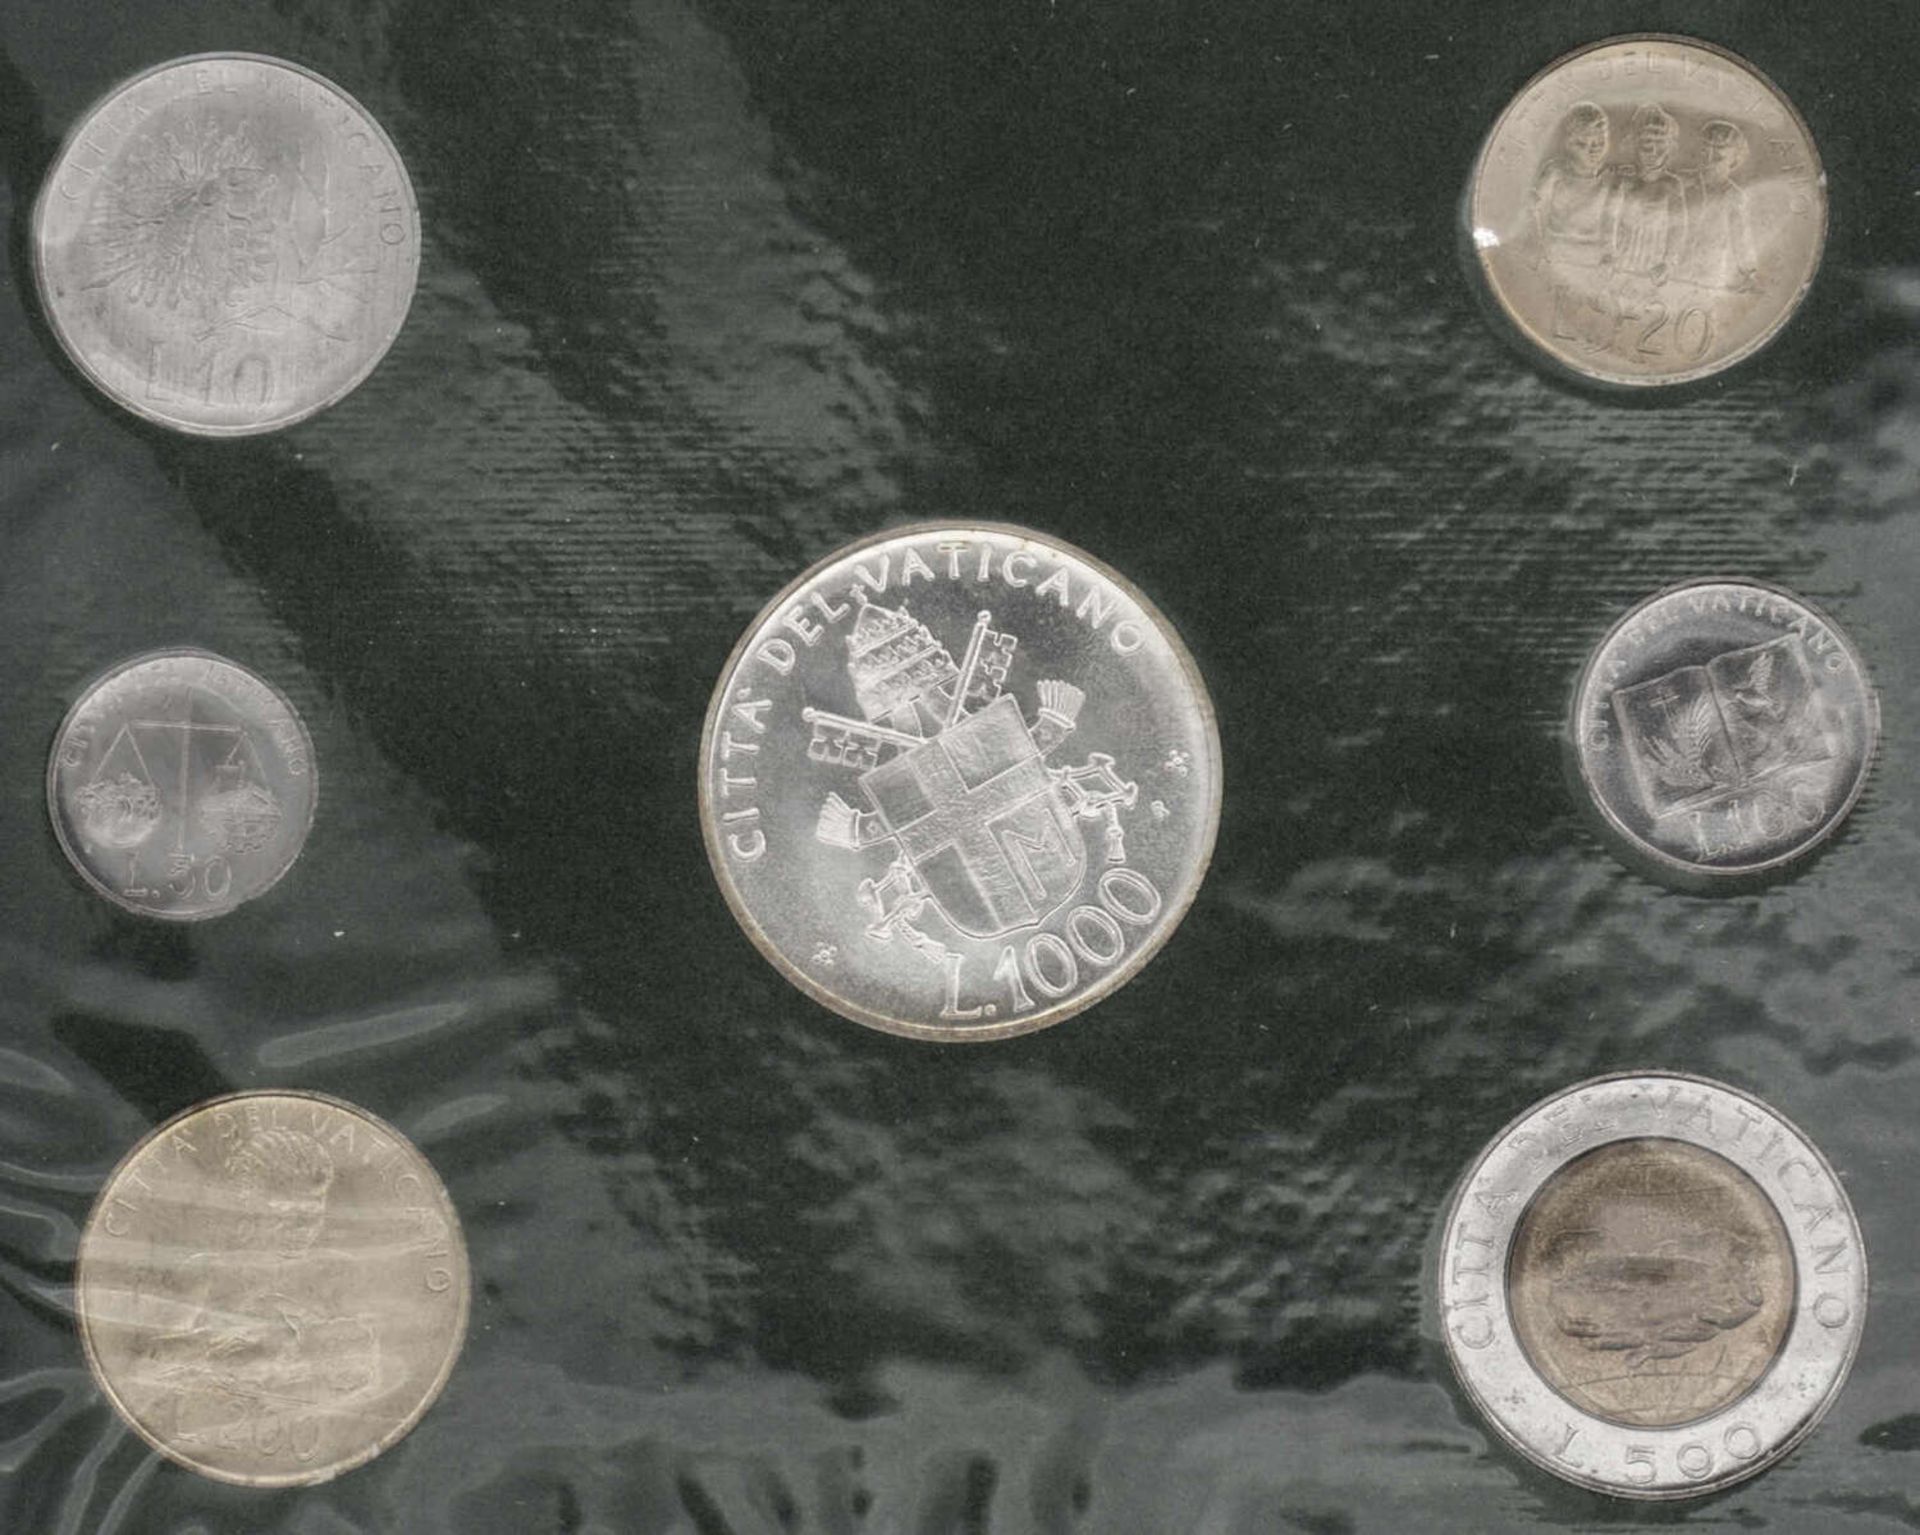 Vatikan 1992, Kursmünzensatz "Johannes Paul II.". Stgl. Vatican 1992, coin set "John Paul II". BU. - Bild 2 aus 2